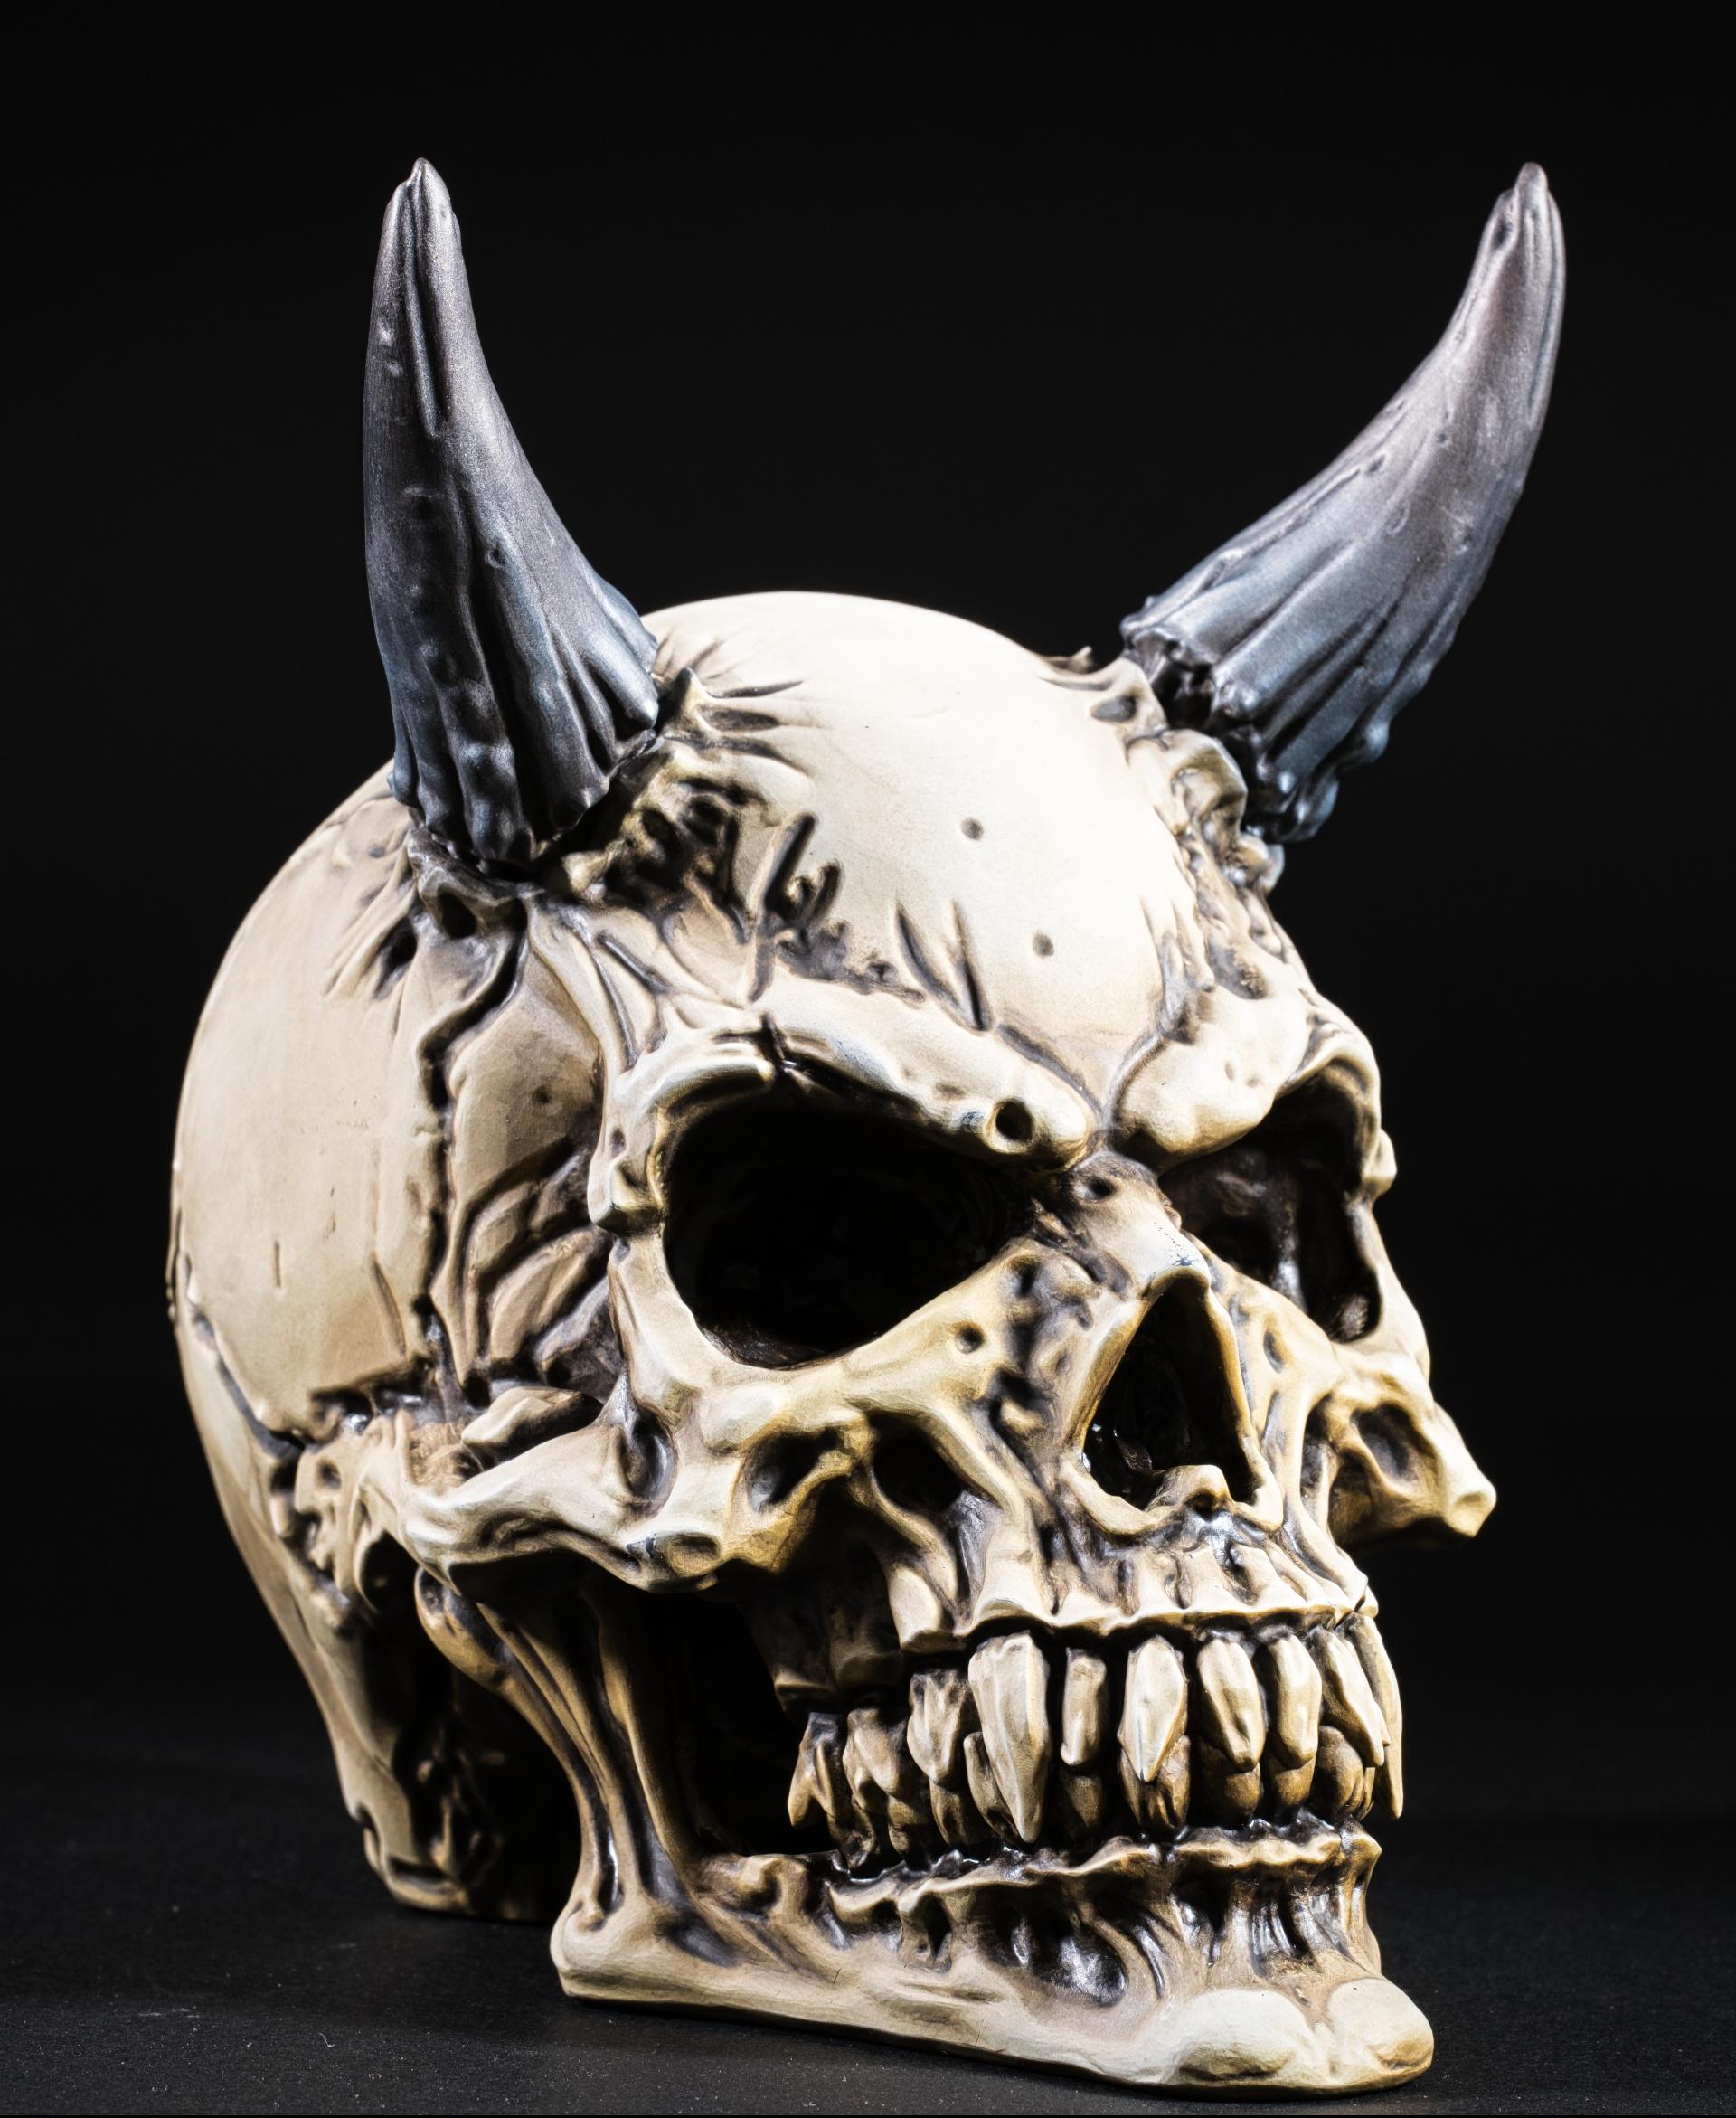 Demon Skull - Decoration - Demon Skull
Printer: Elegoo Saturn 2
Resin: Siraya Tech Navy Grey
Painted with acrylics & oils - 3d model